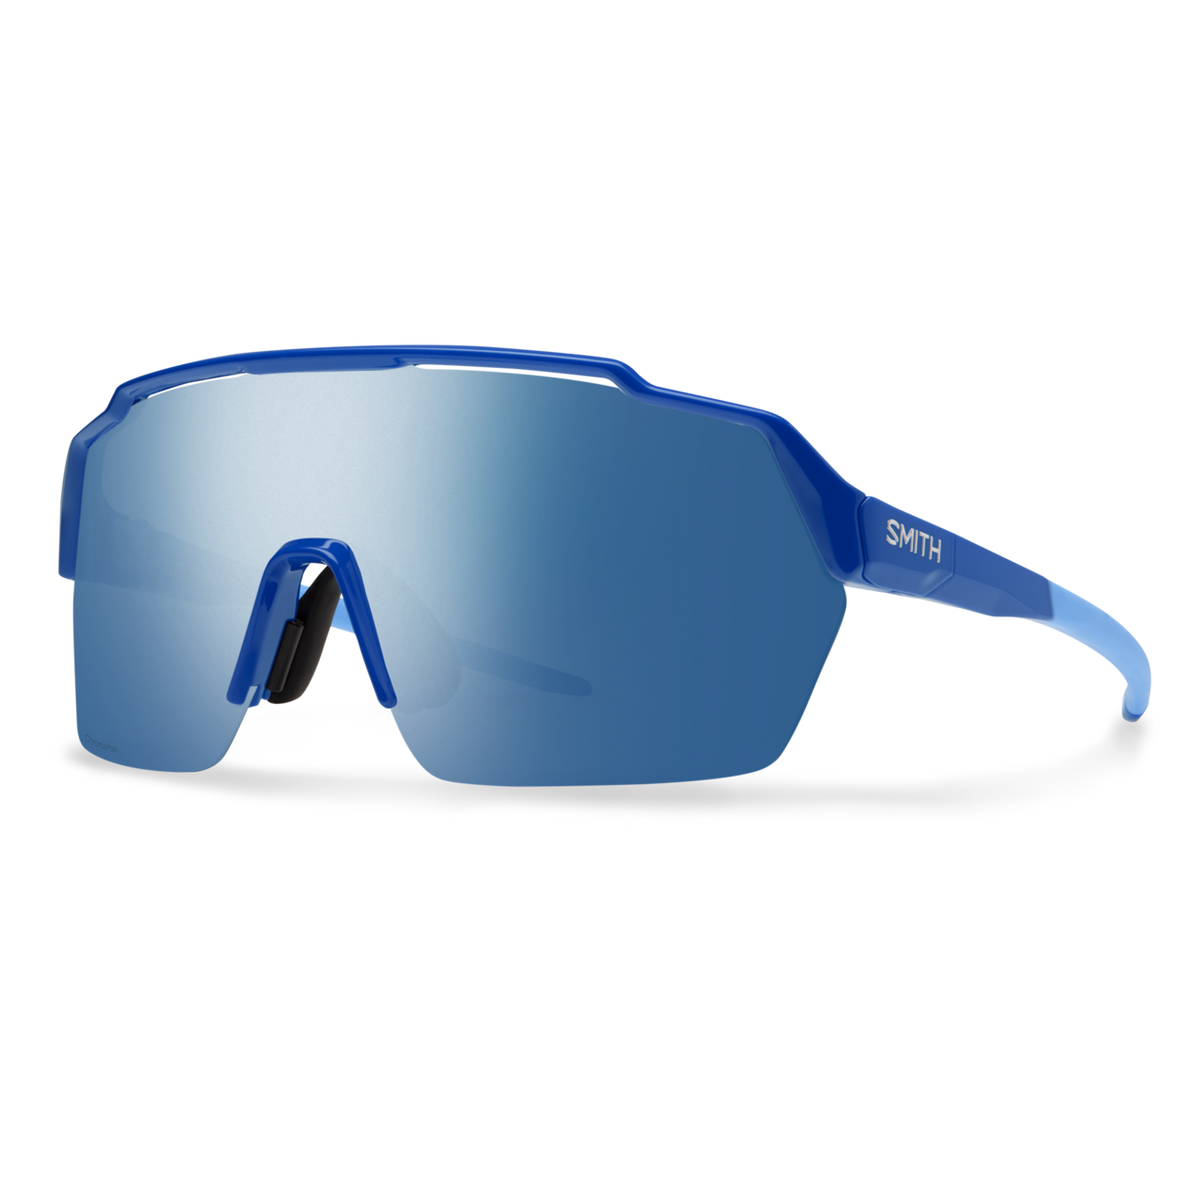 Smith Shift MAG Sunglasses - Shield Lens Performance Sports